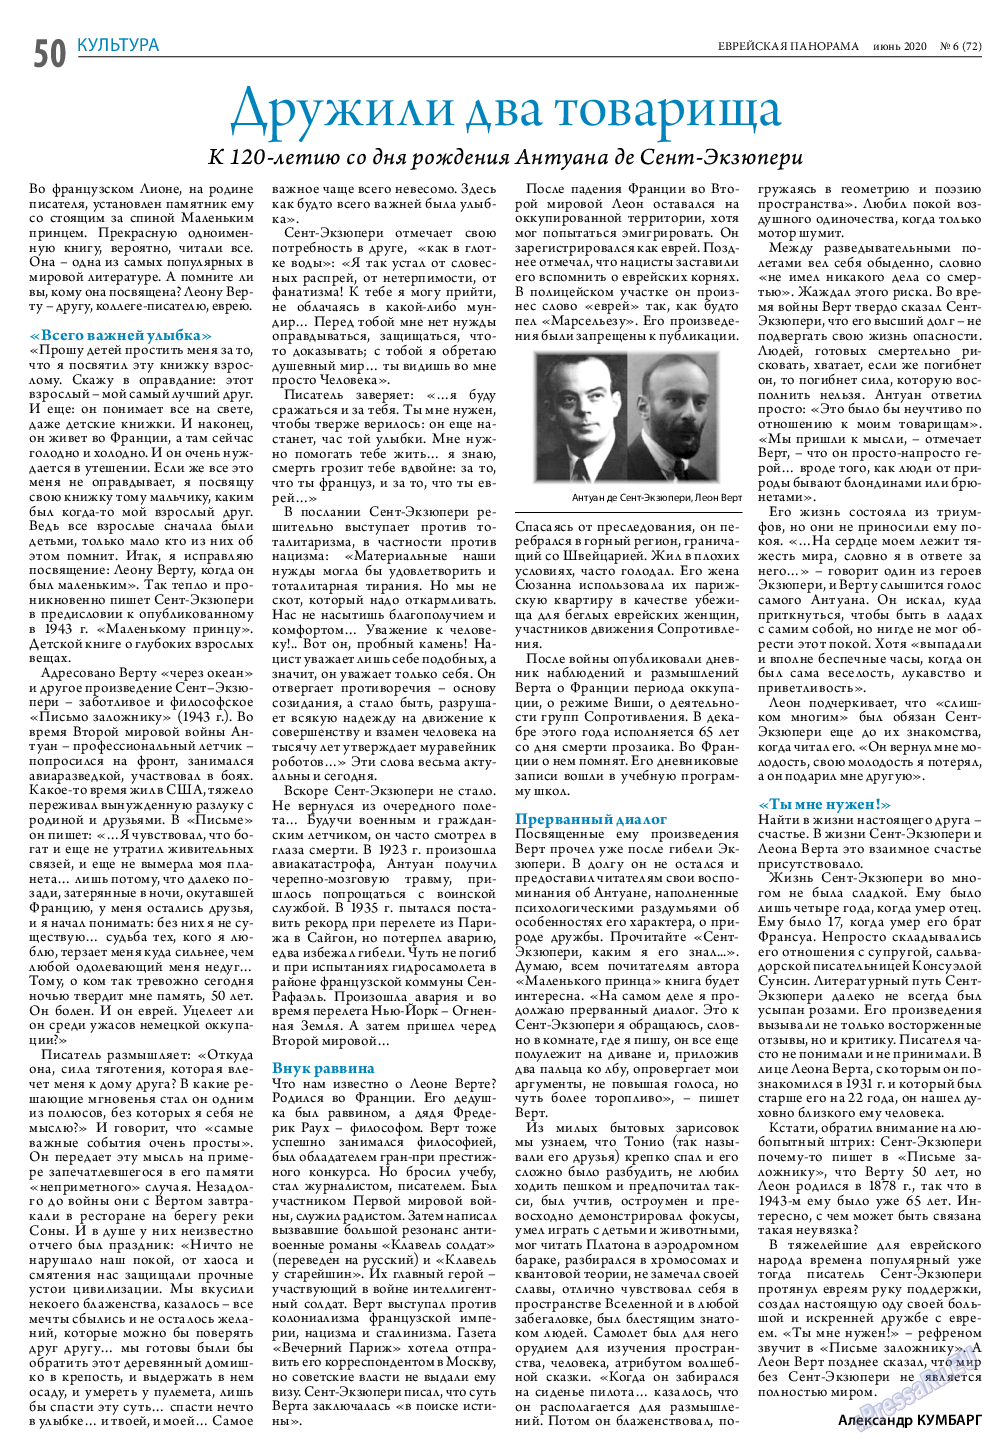 Еврейская панорама, газета. 2020 №6 стр.50